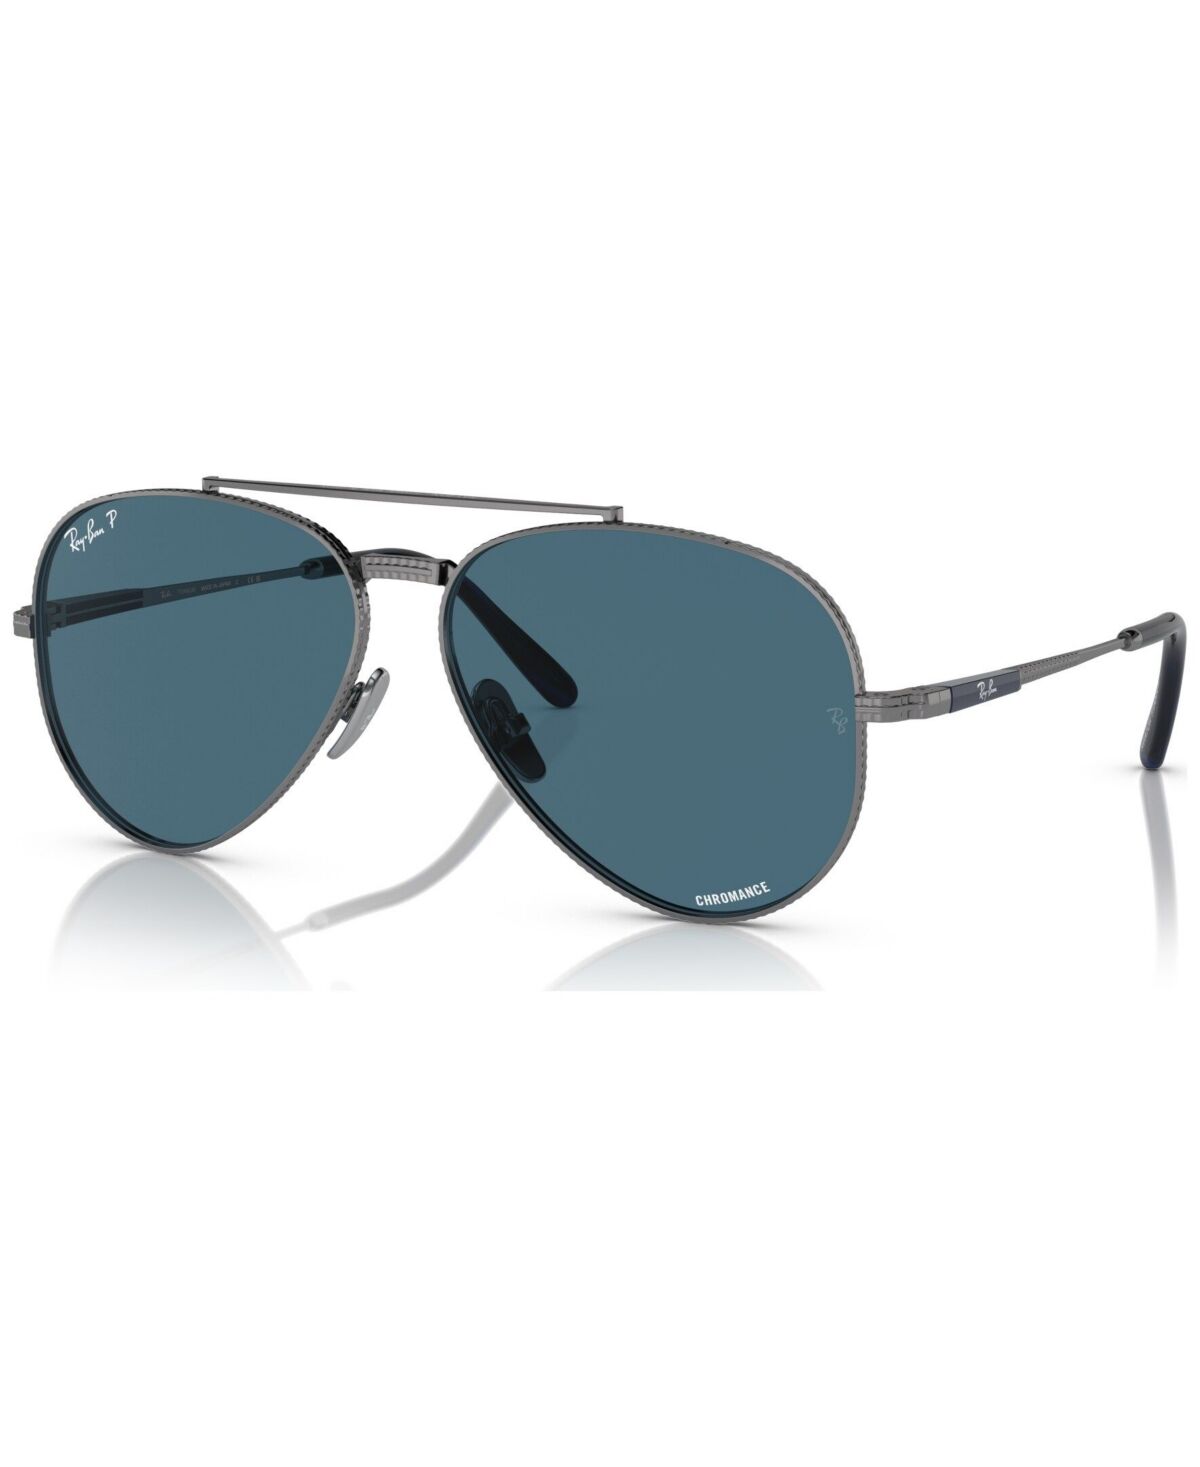 Ray-Ban Unisex Polarized Sunglasses, Aviator Ii Titanium 58 - Gunmetal